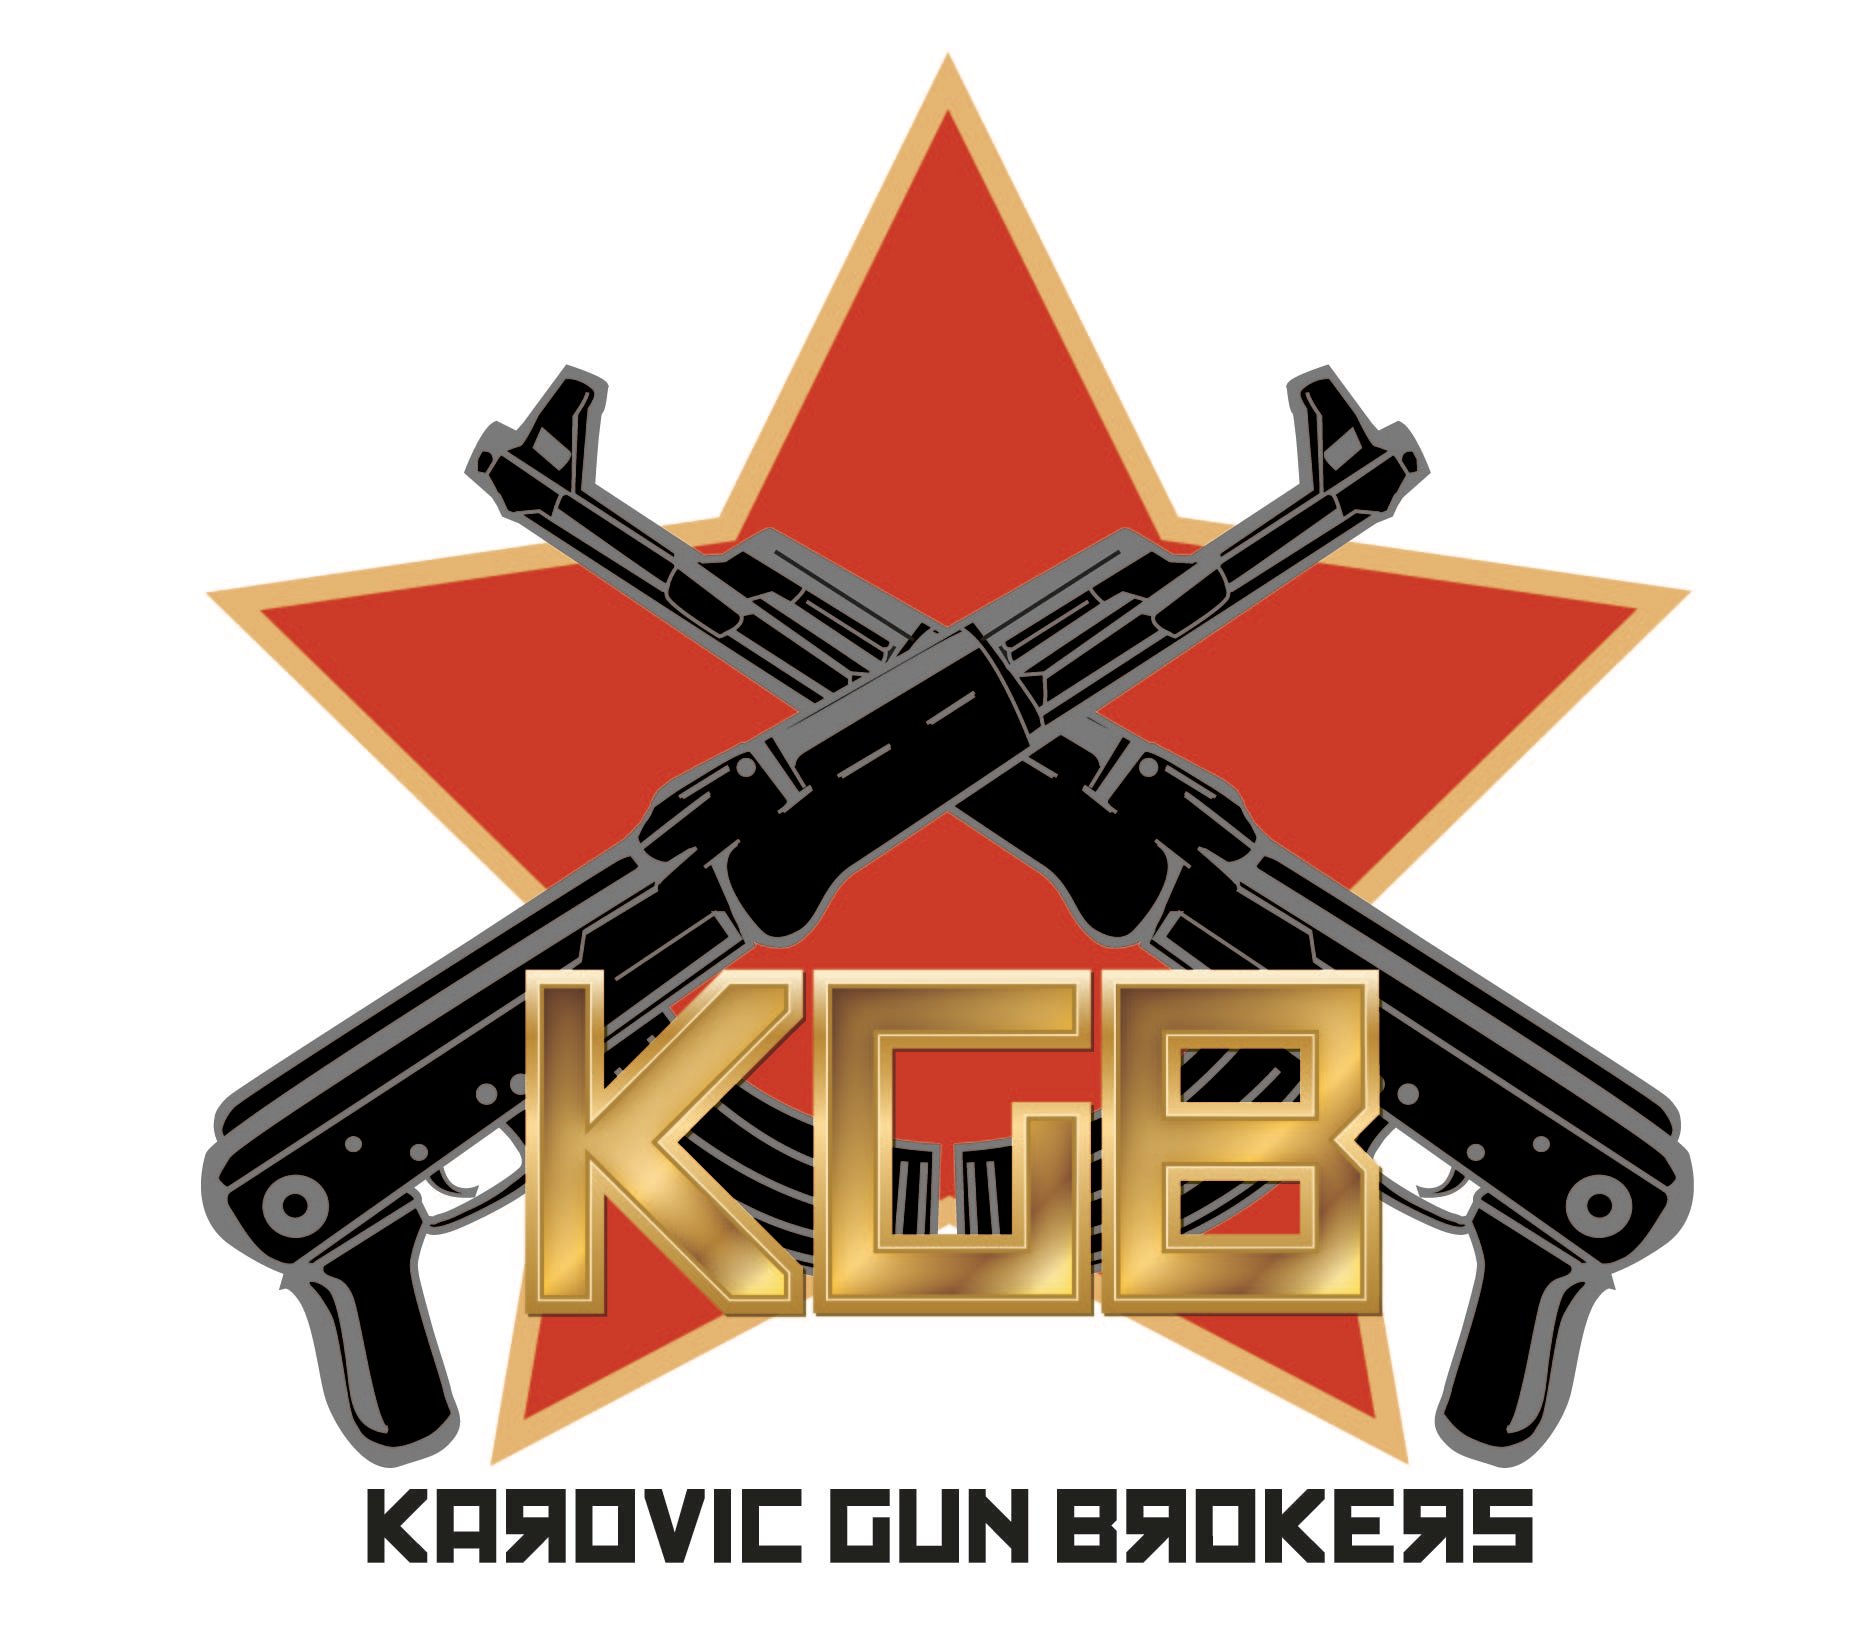 Kbg Logo - Logo Design for K.G.B. or Karovic Gun Brokers or KGBsales